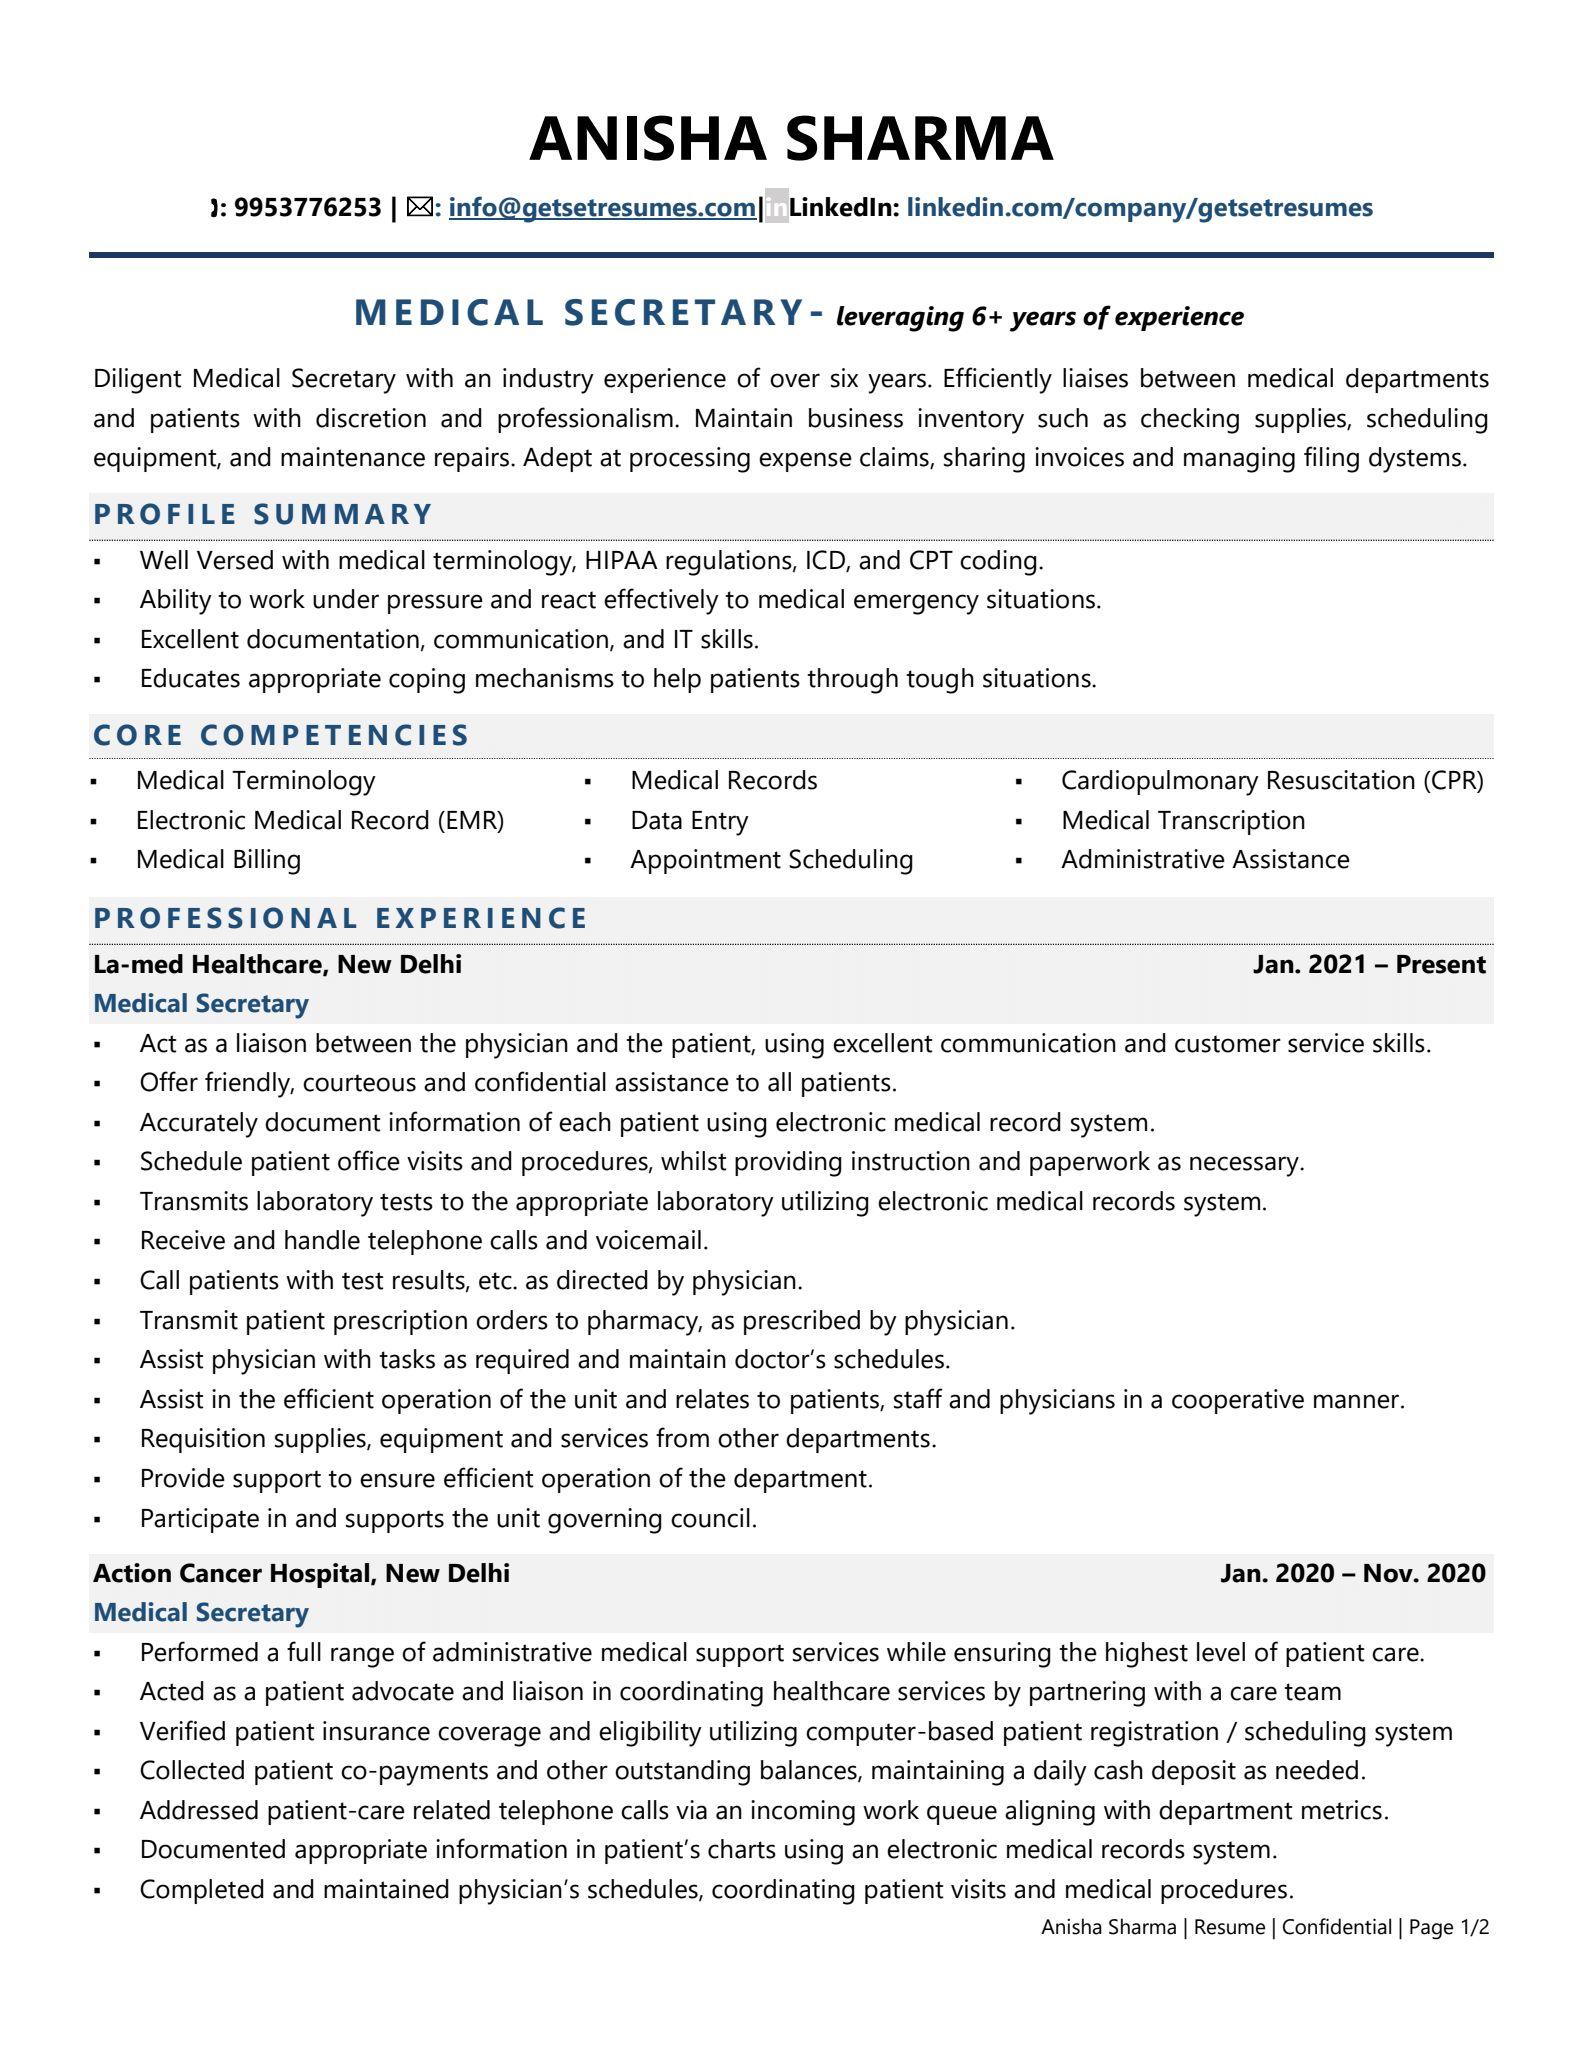 Medical Secretary - Resume Example & Template